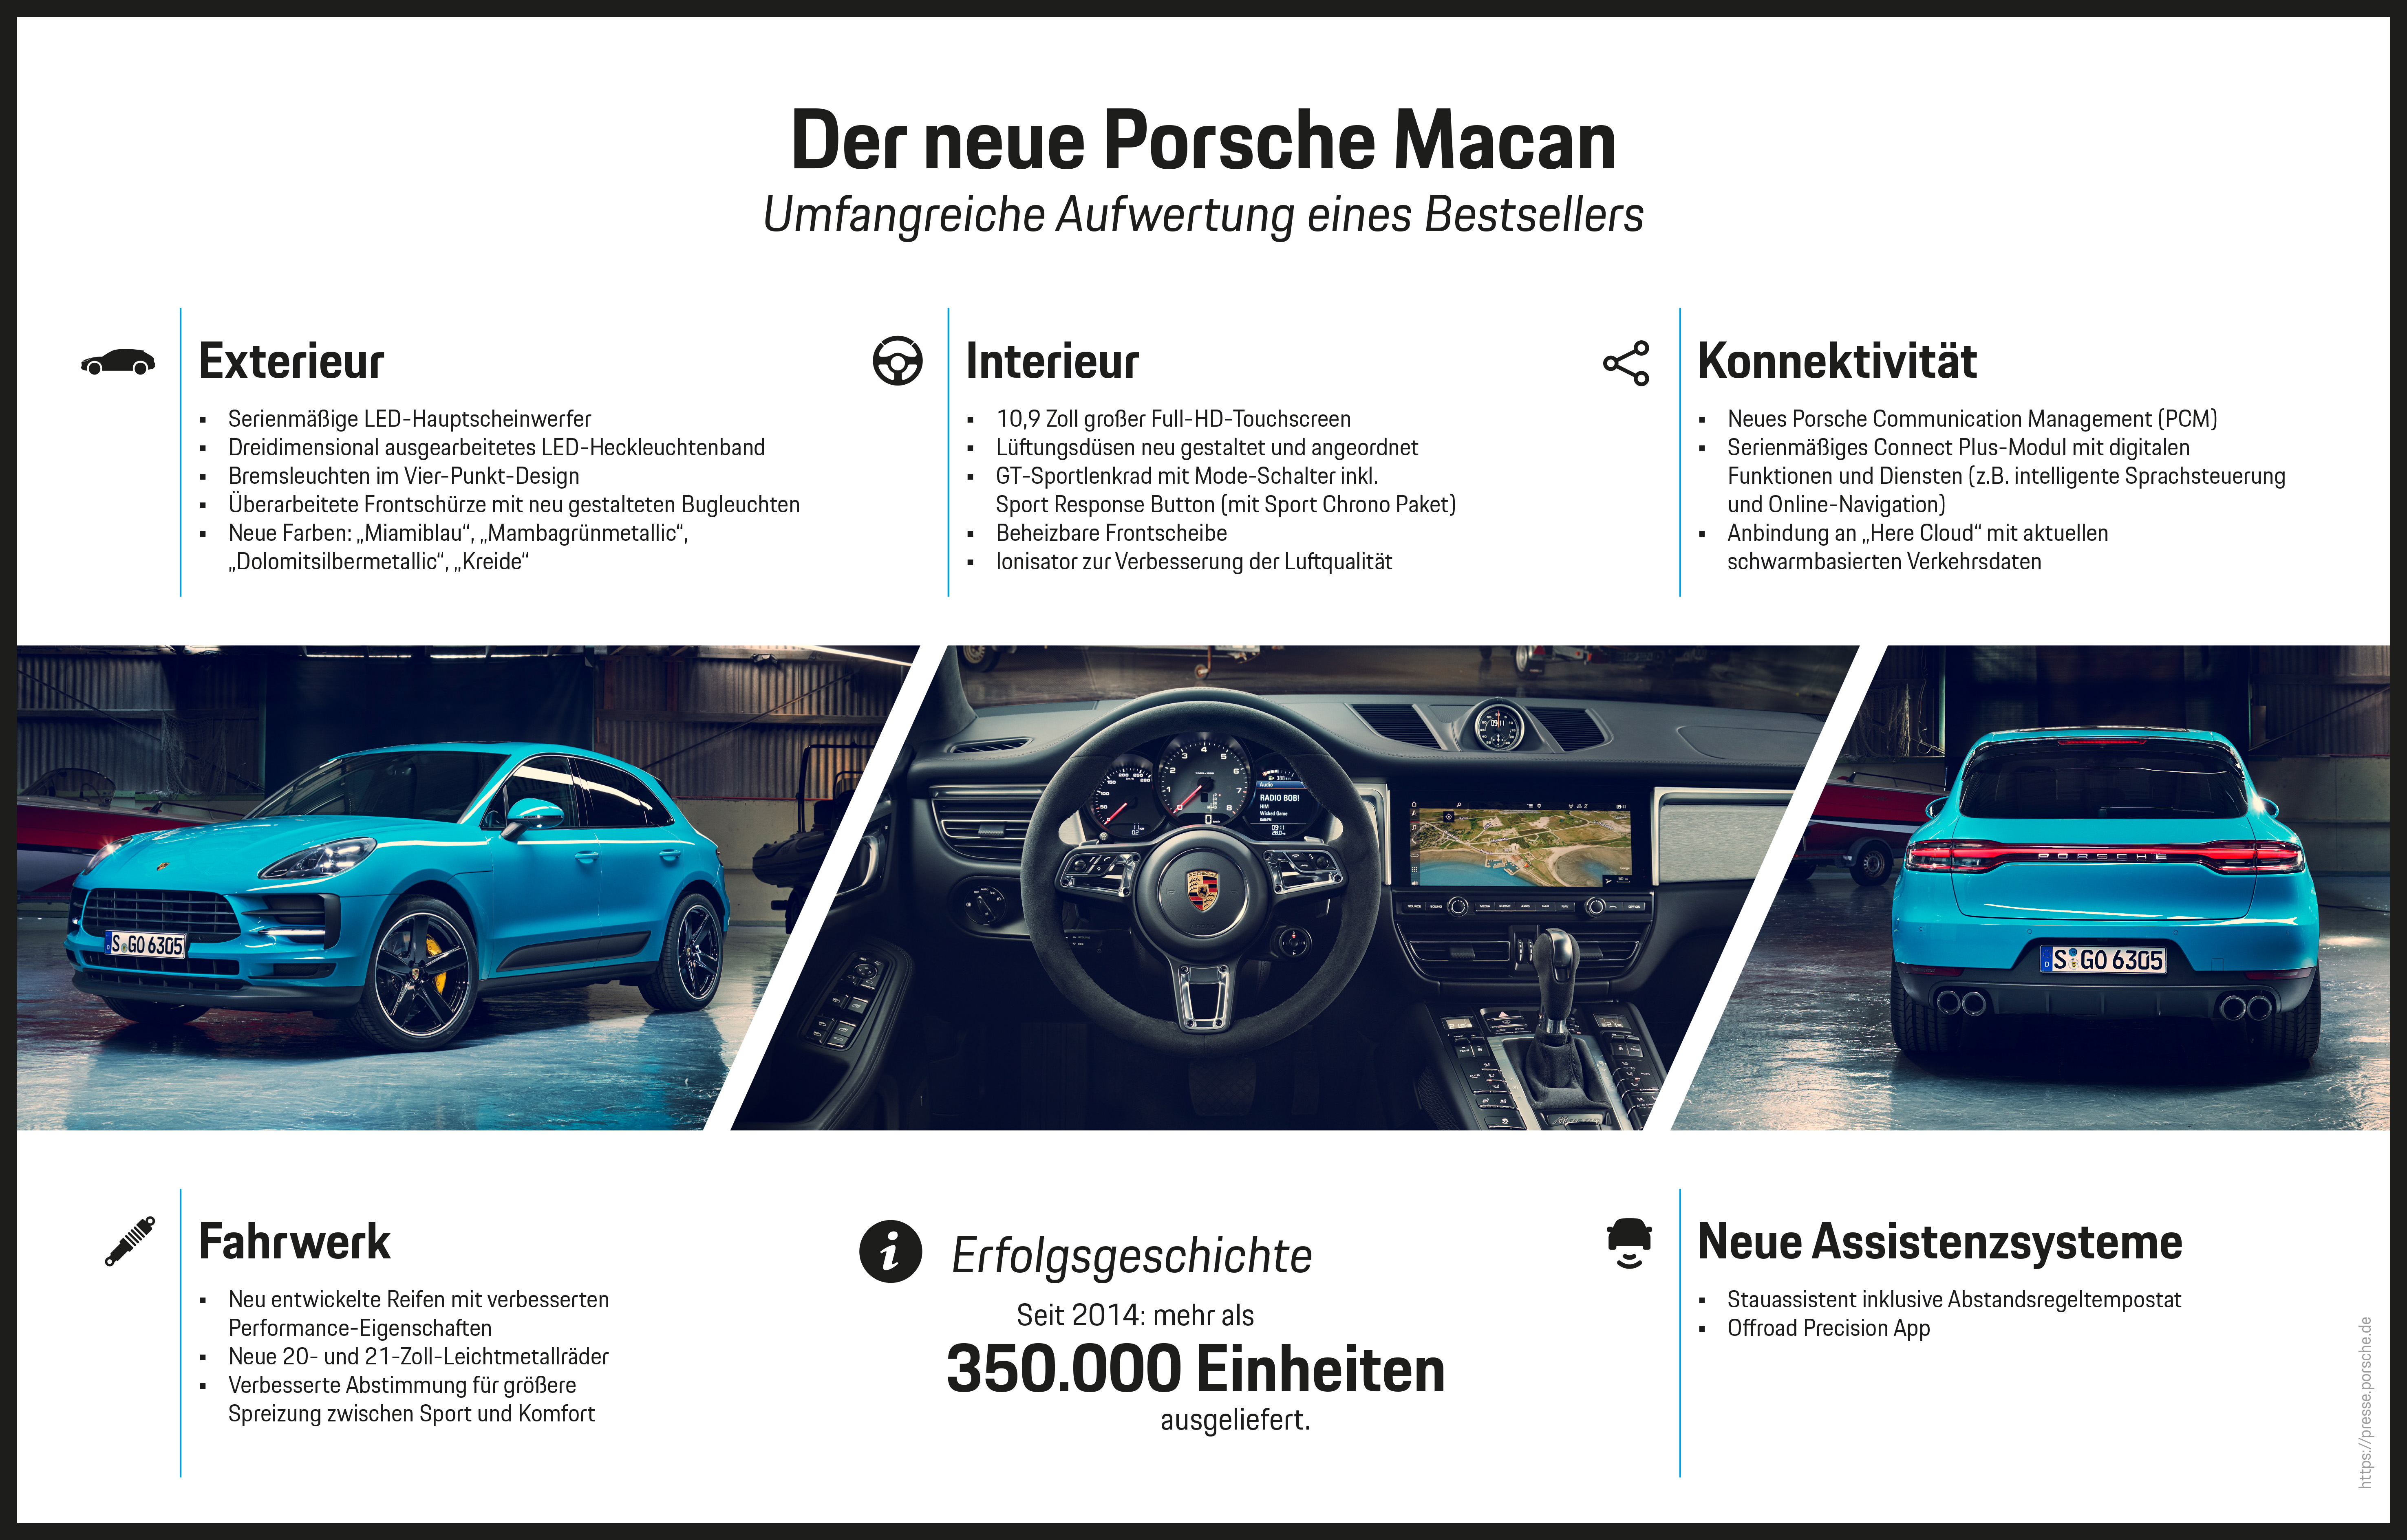 Der neue Porsche Macan, Infografik, 2018, Porsche AG